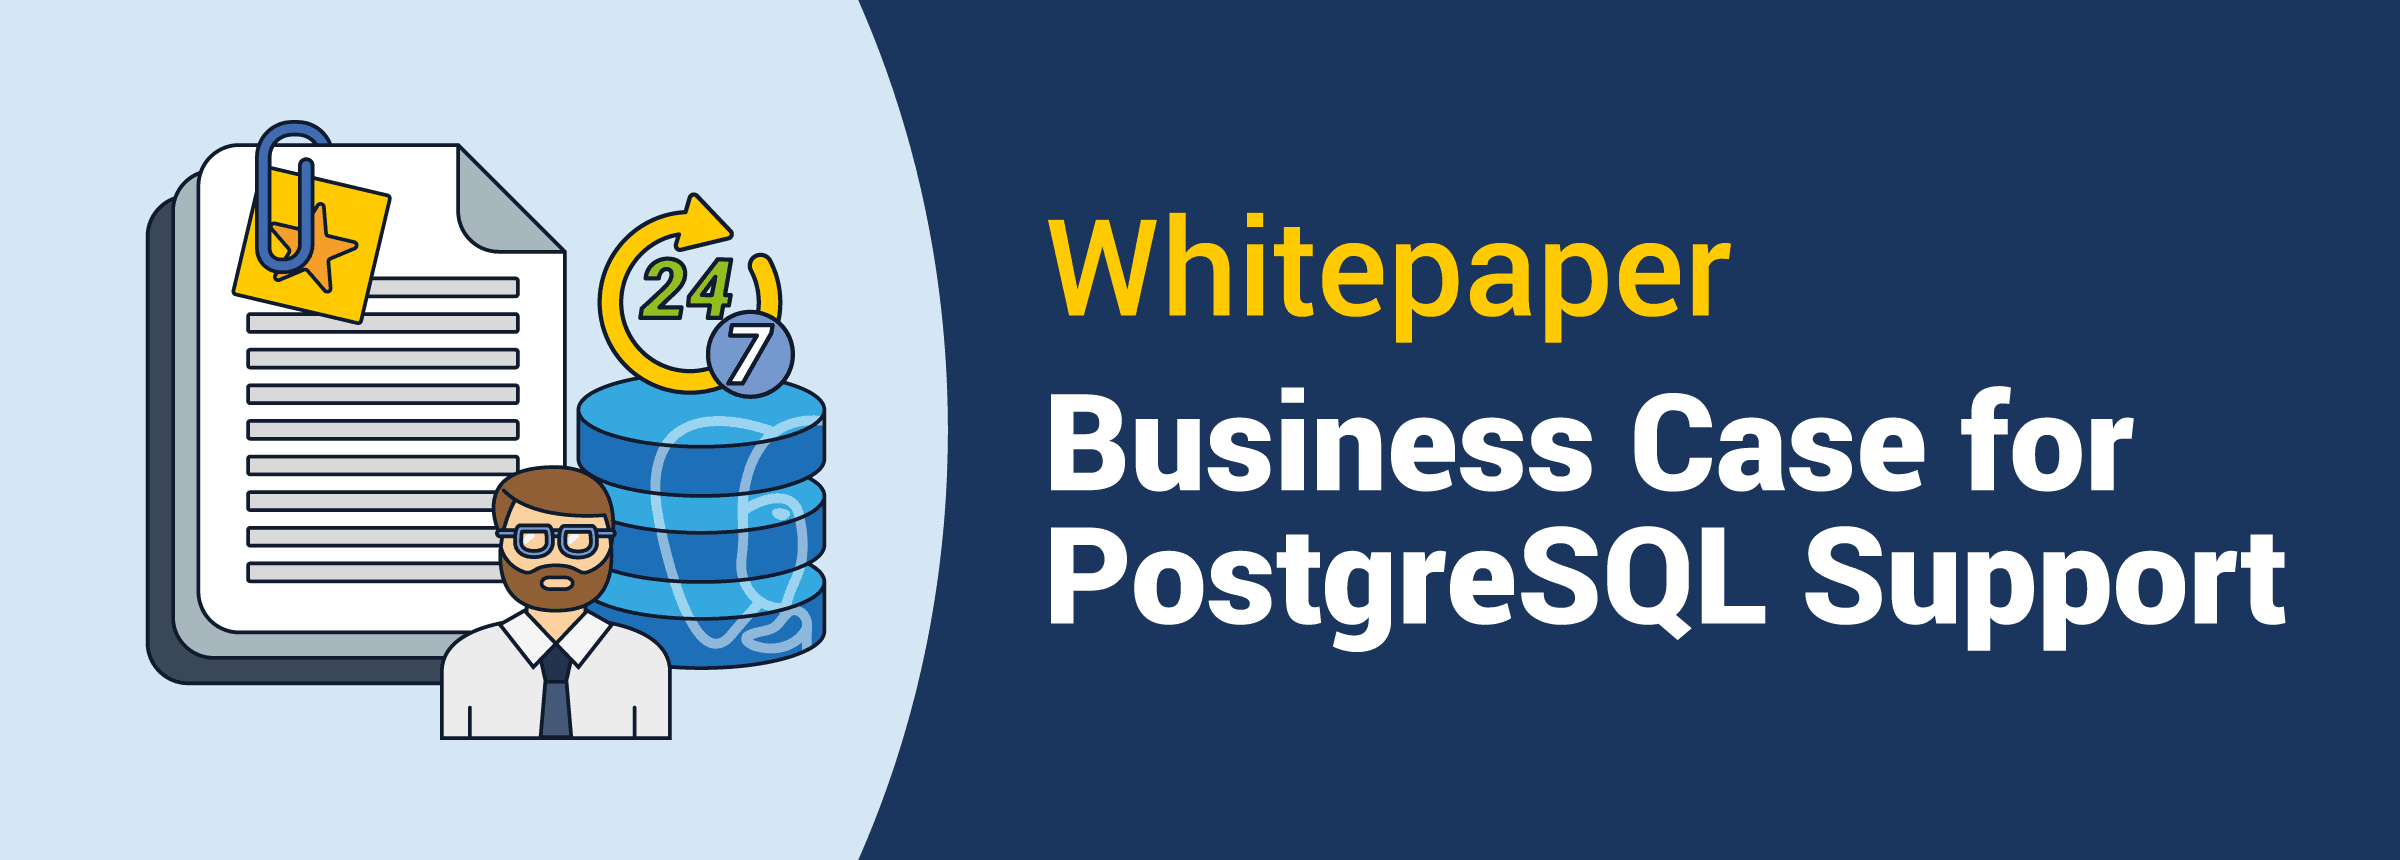 Whitepaper: Business Case for PostgreSQL Support